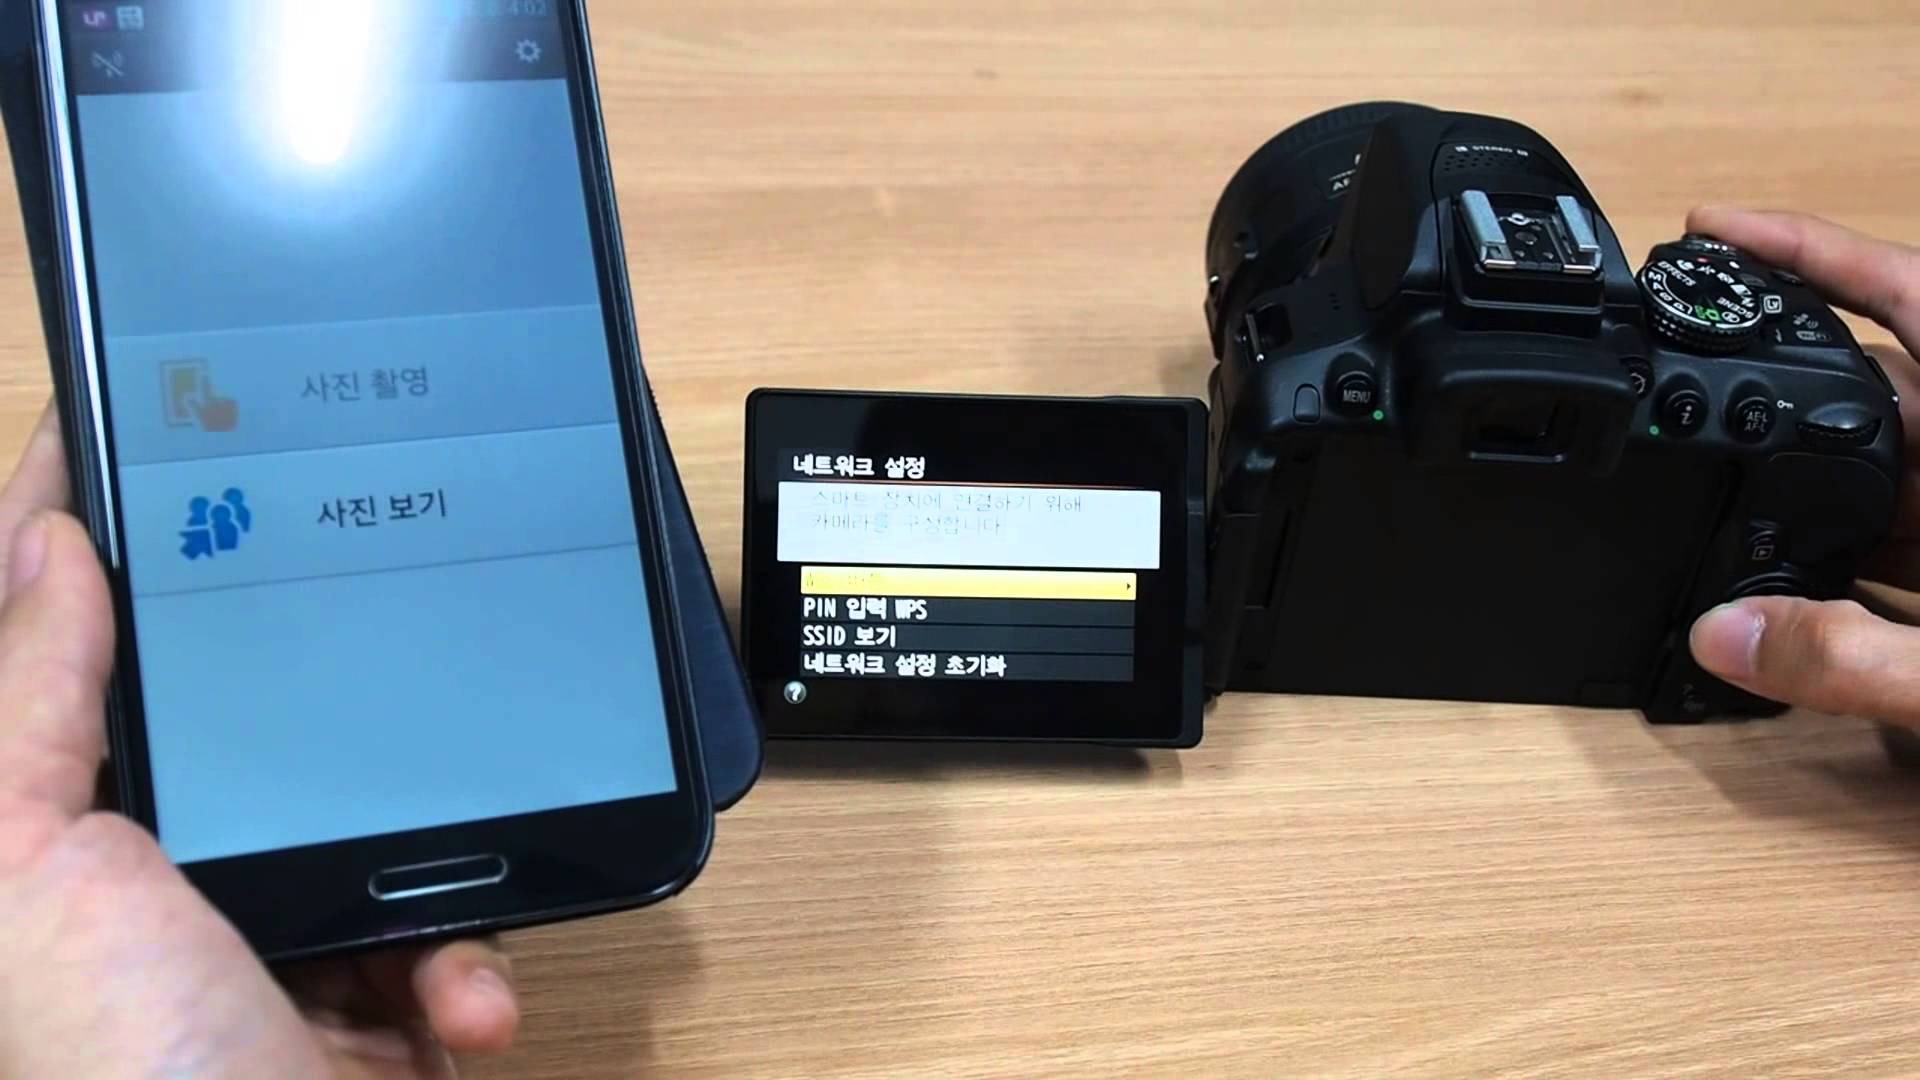 Nikon D3300 24.2 MP CMOS Digital SLR Camera Review